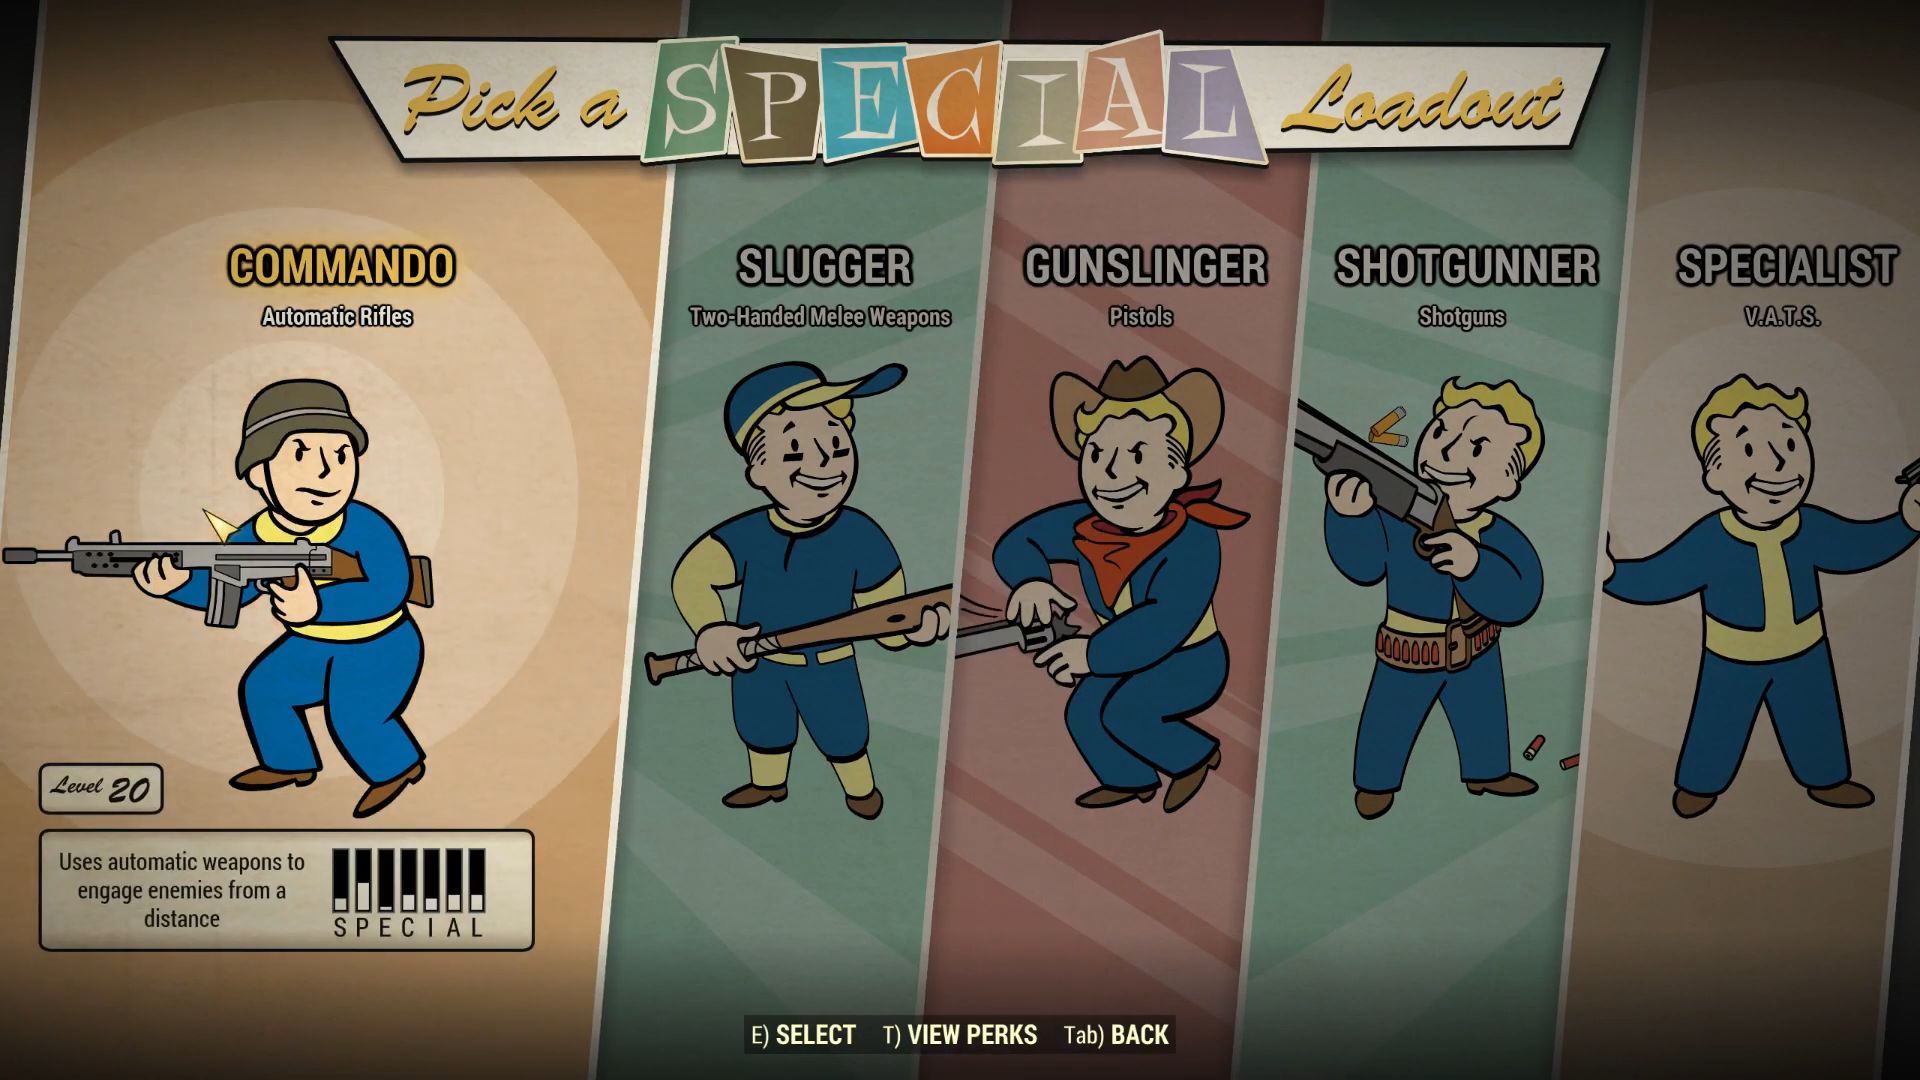 The Commando loadout in Fallout 76